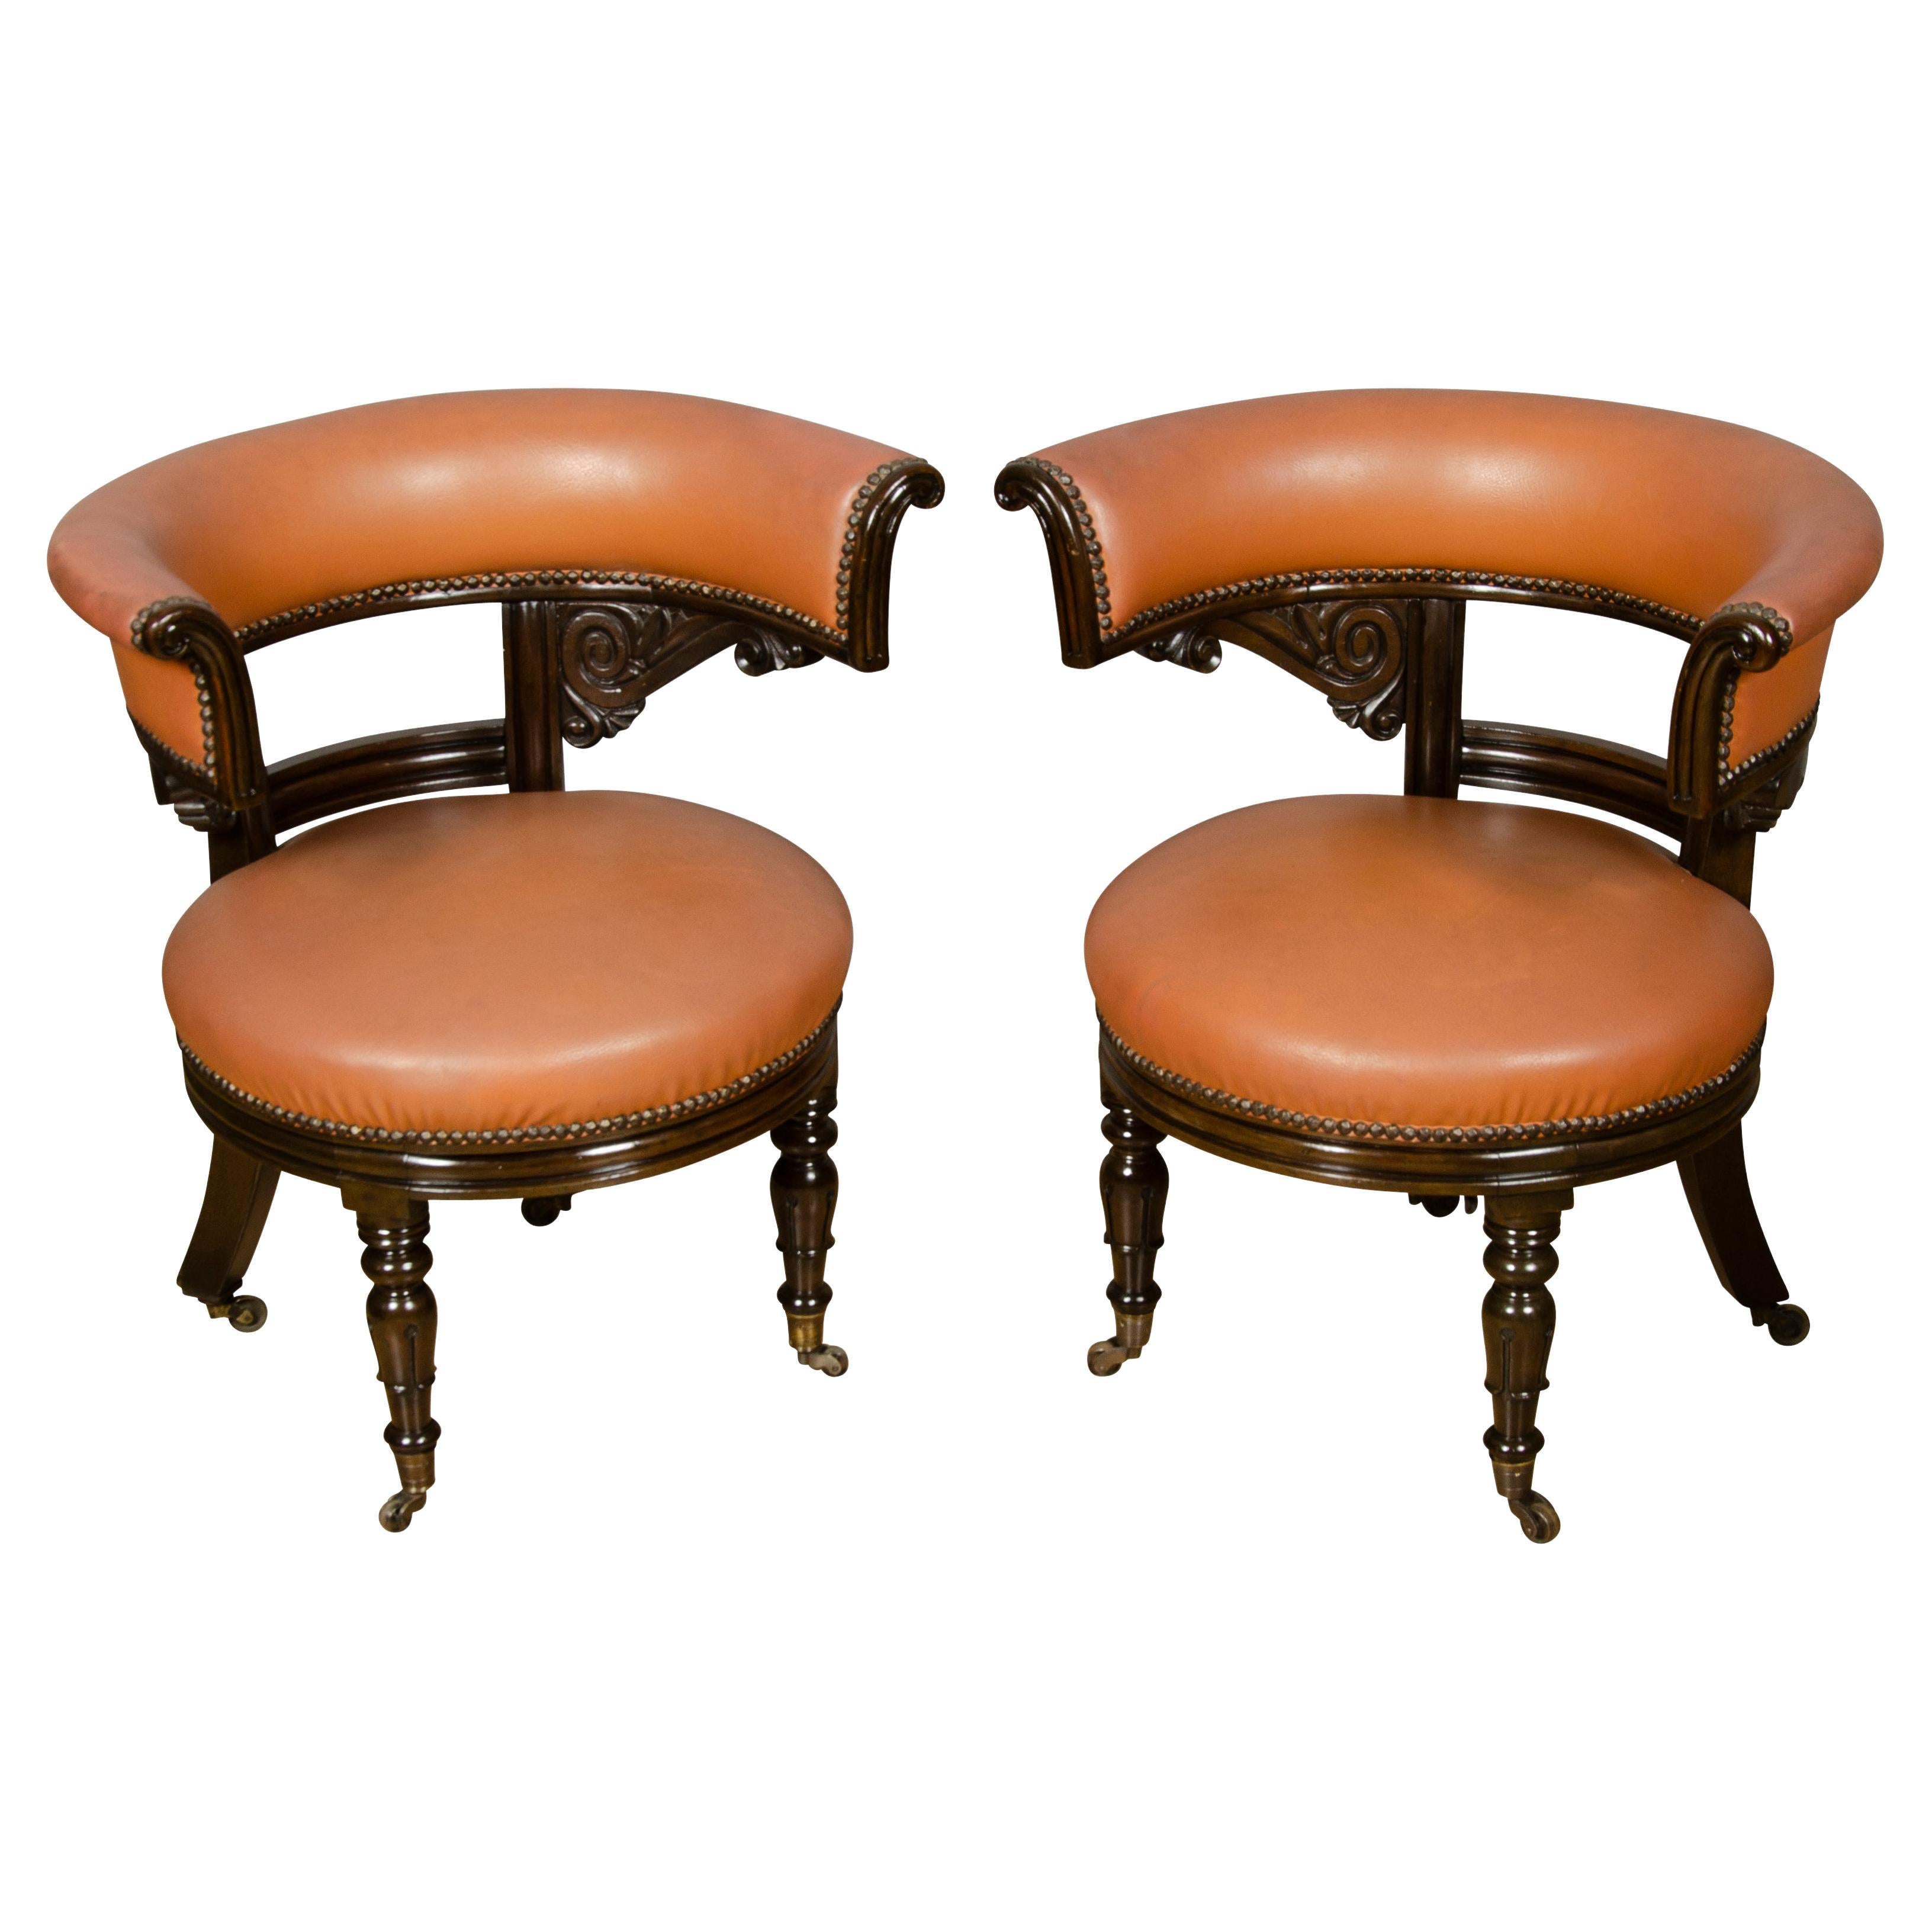 Pair of Regency Style Mahogany Chairs